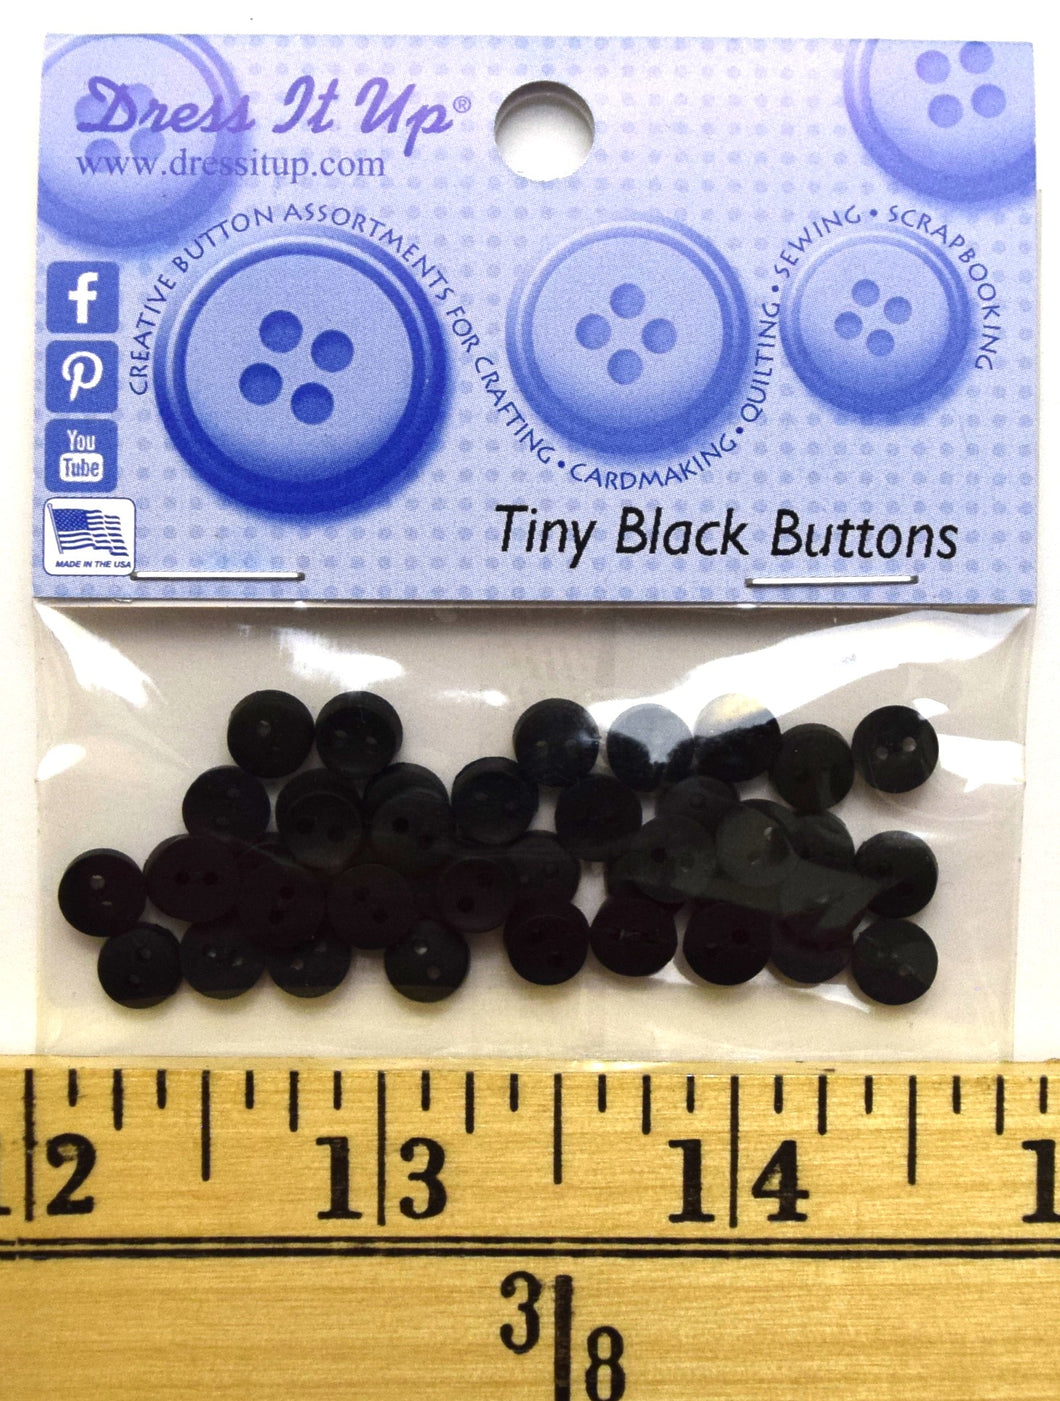 Tiny Black Buttons